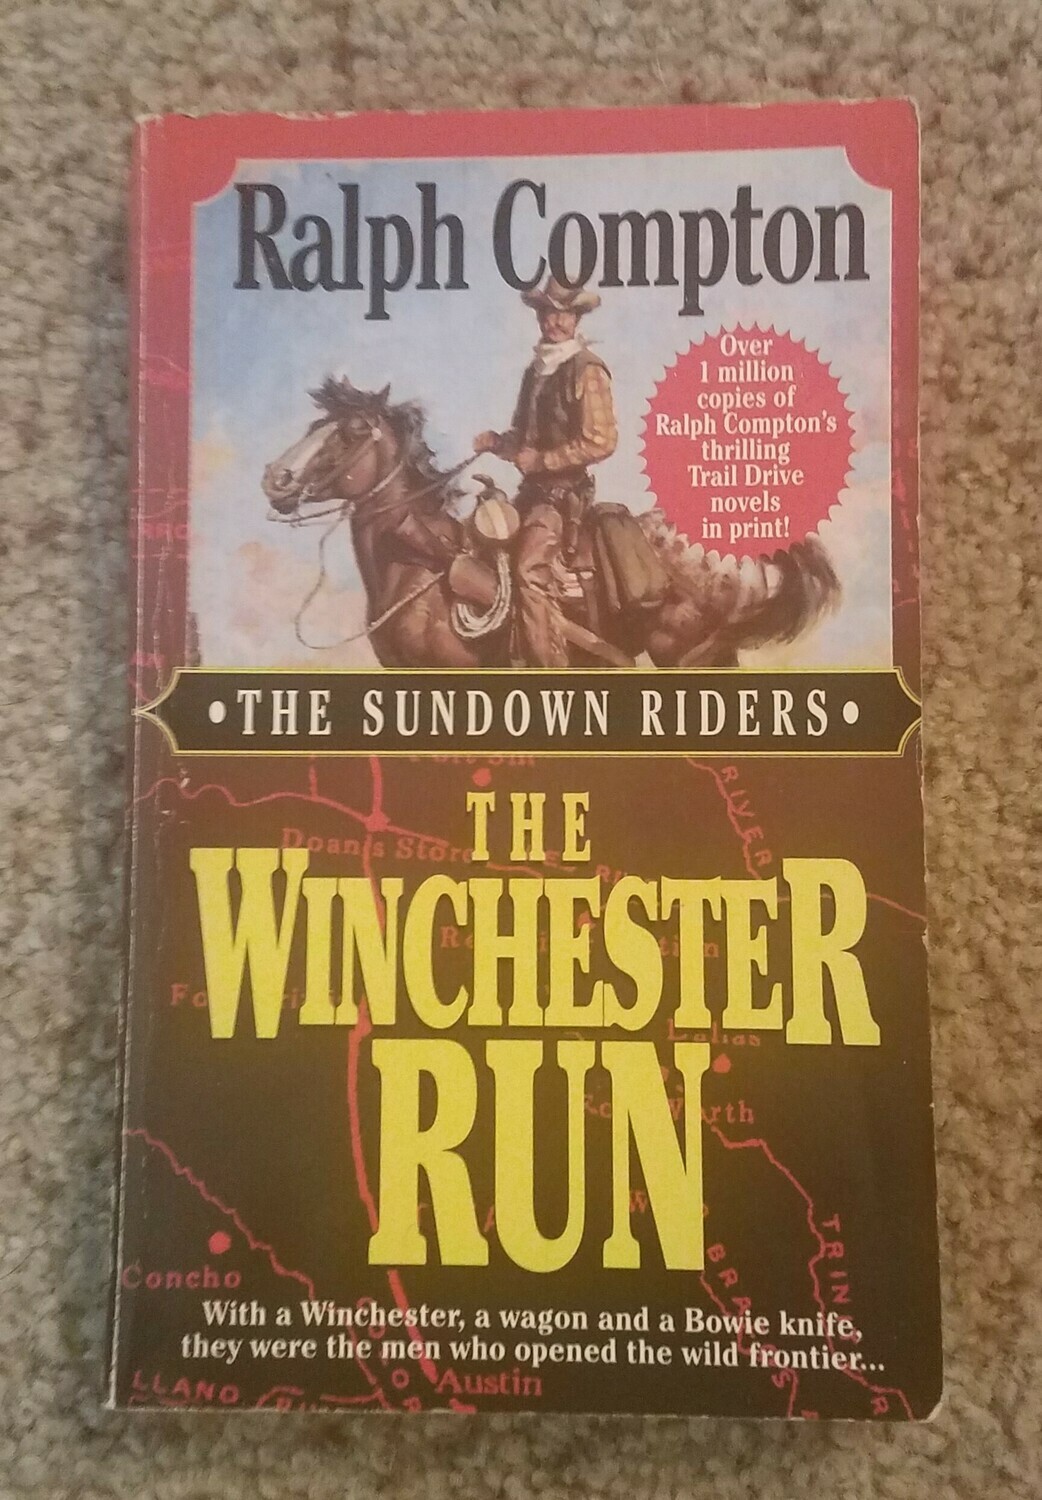 The Sundown Riders: The Winchester Run by Ralph Compton